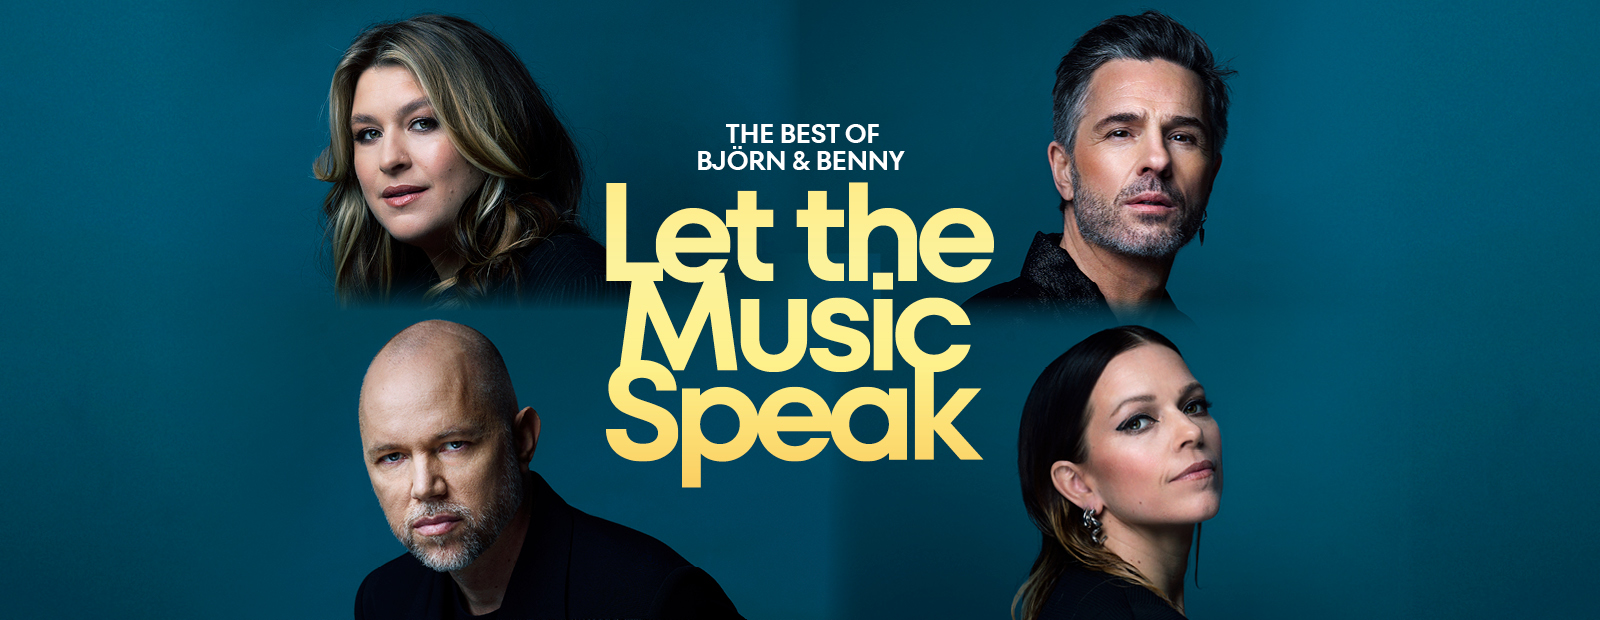 Let the Music Speak - the best of Björn & Benny